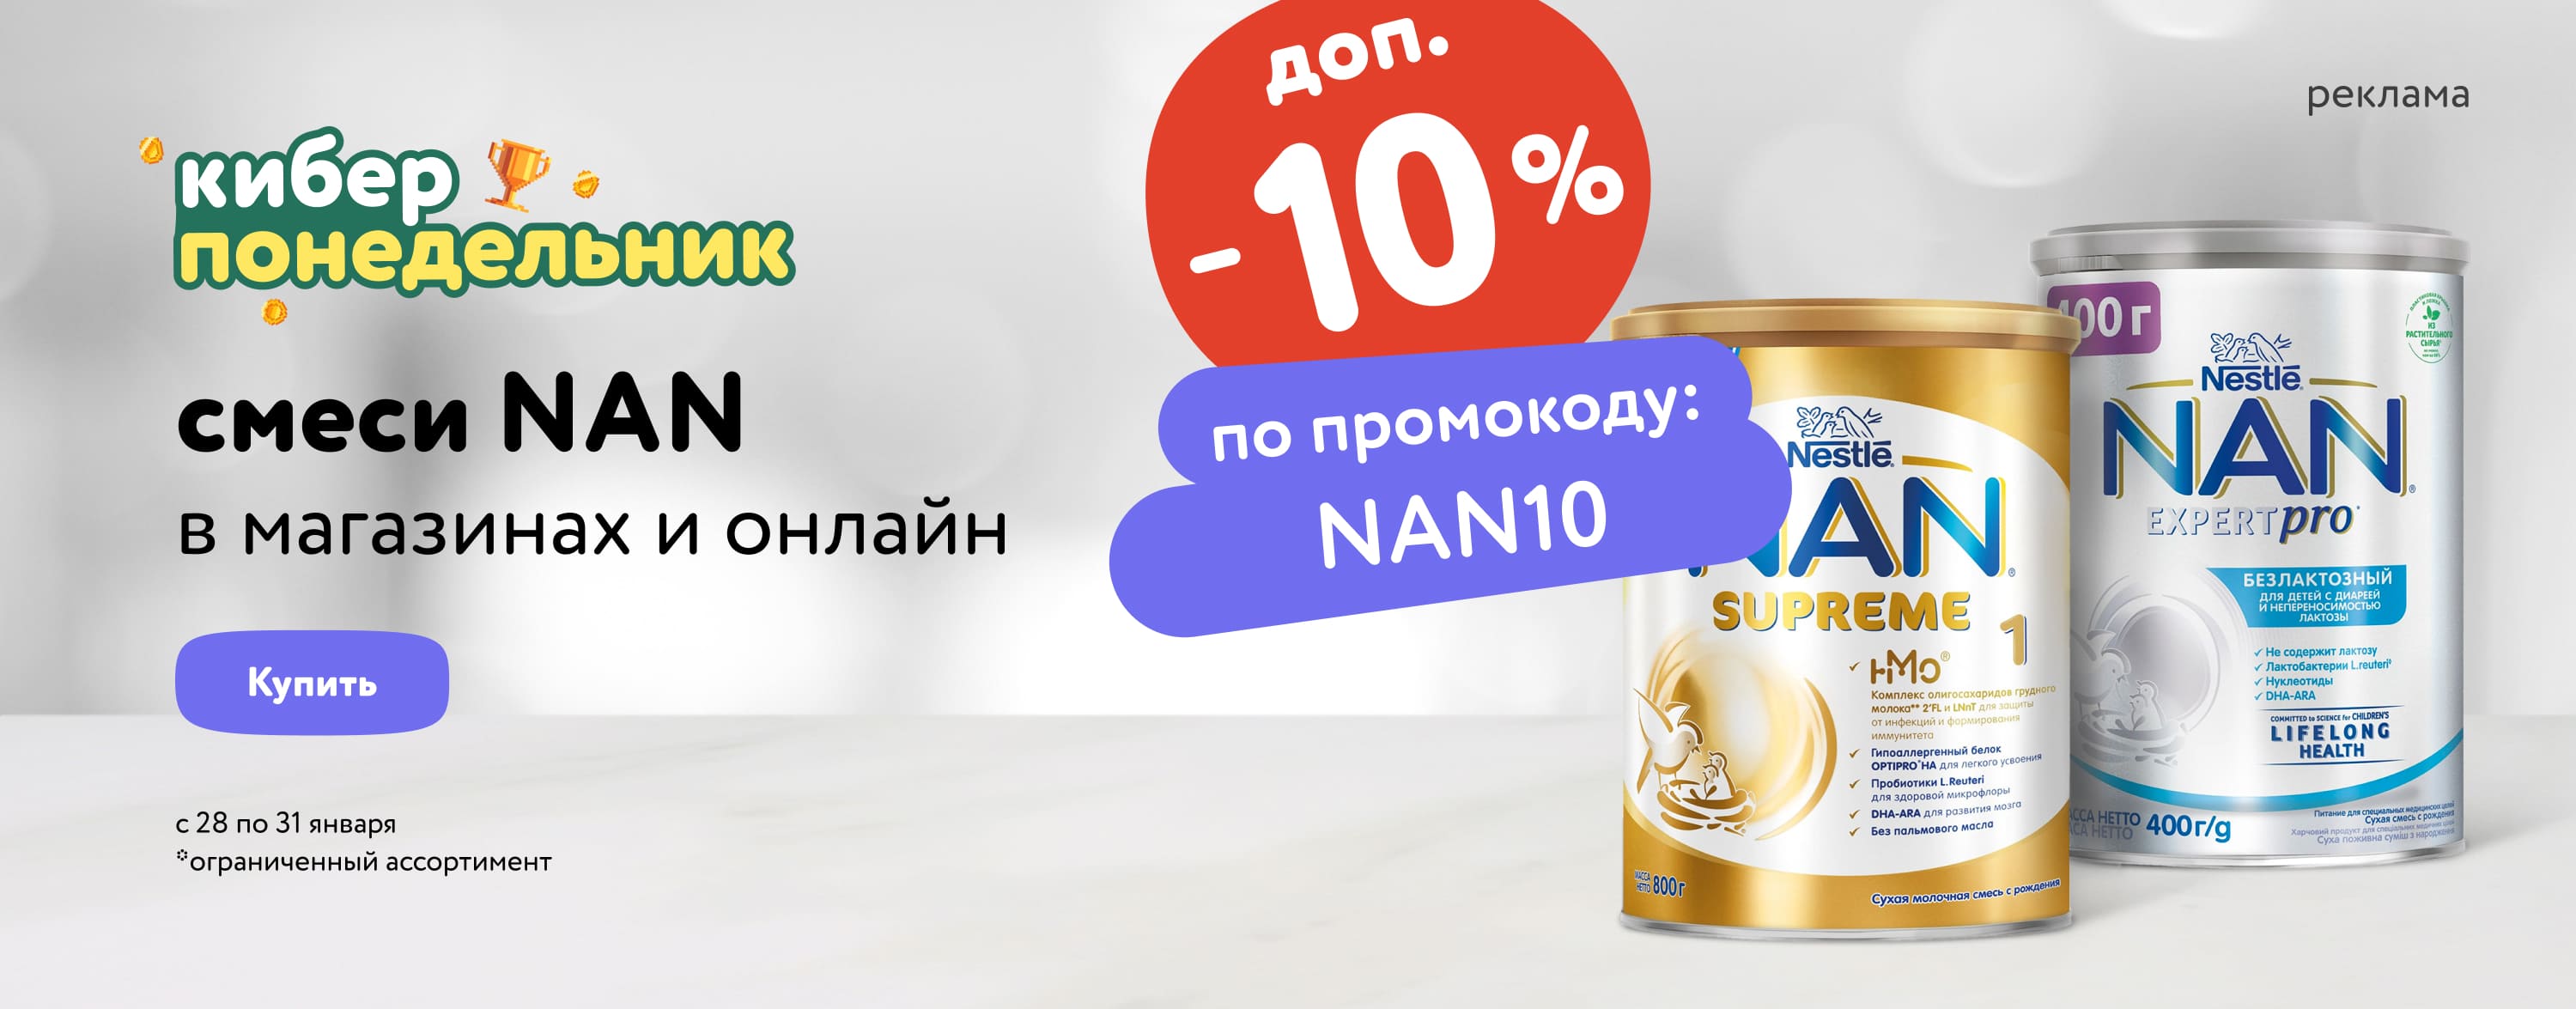 Доп. скидка 10 % на смеси NAN по промокоду статика